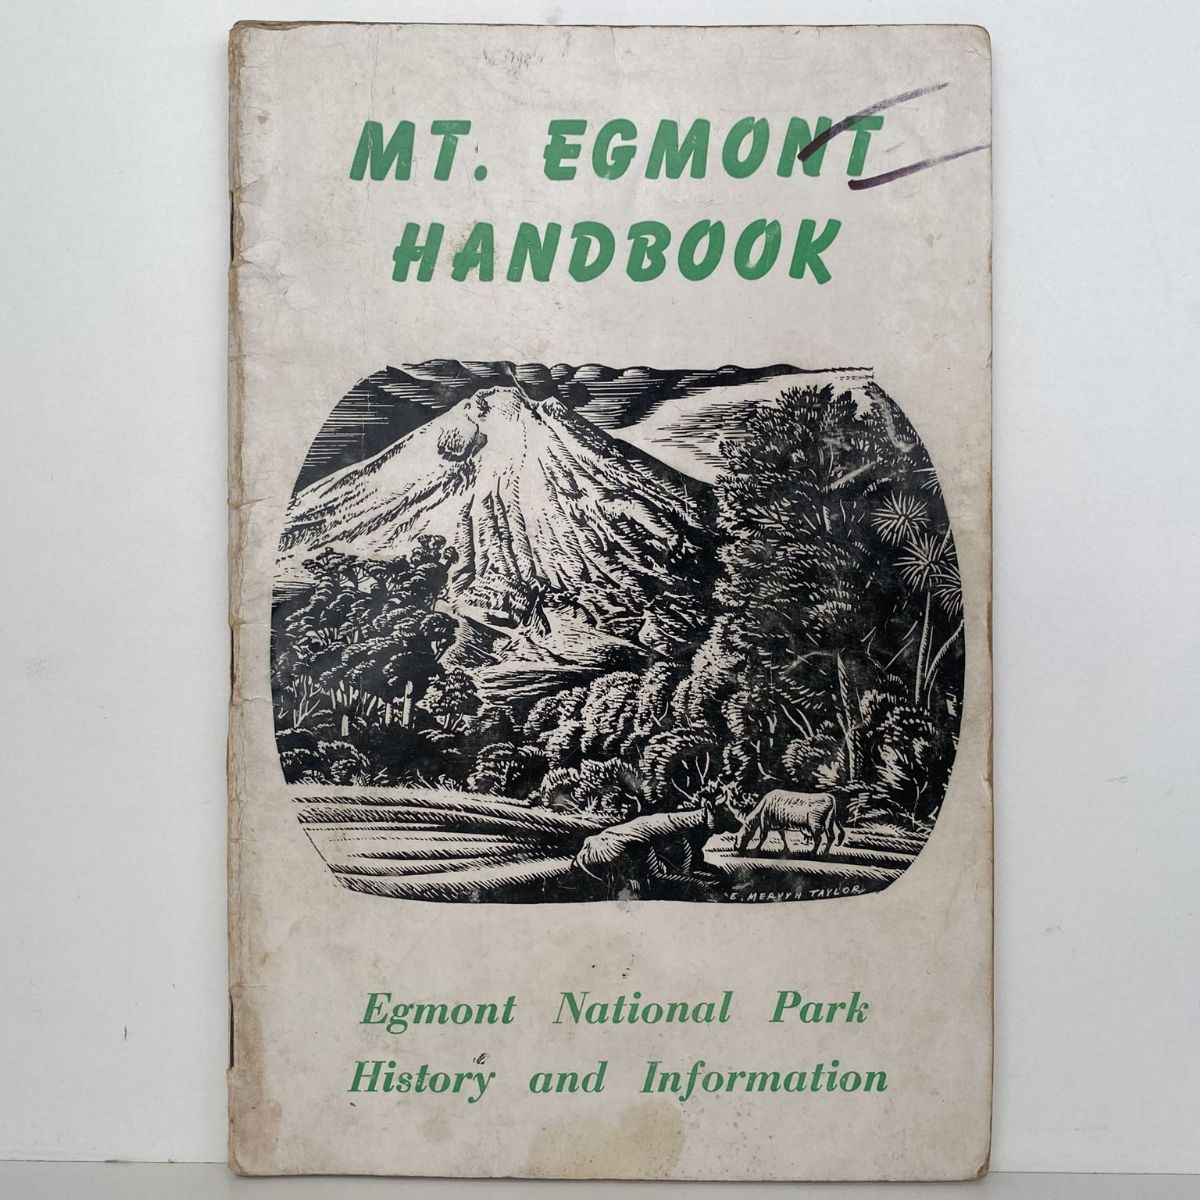 MT. EGMONT HANDBOOK: History and Information